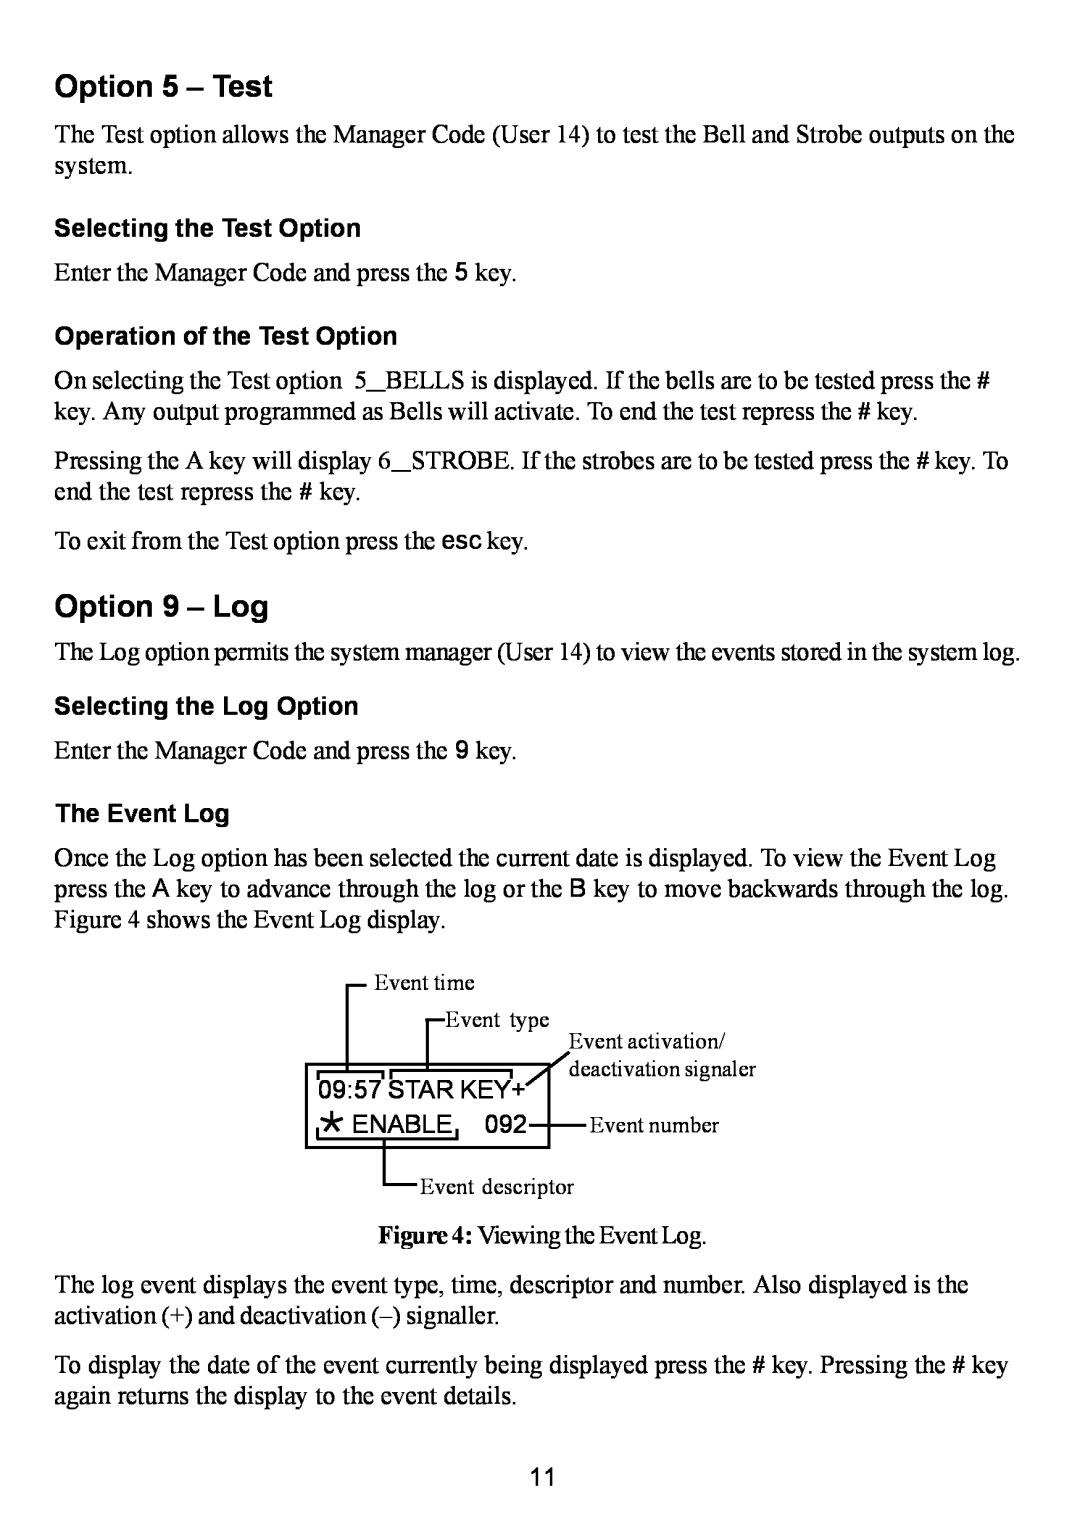 Honeywell 16 Plus Option 5 - Test, Option 9 - Log, Selecting the Test Option, Operation of the Test Option, The Event Log 